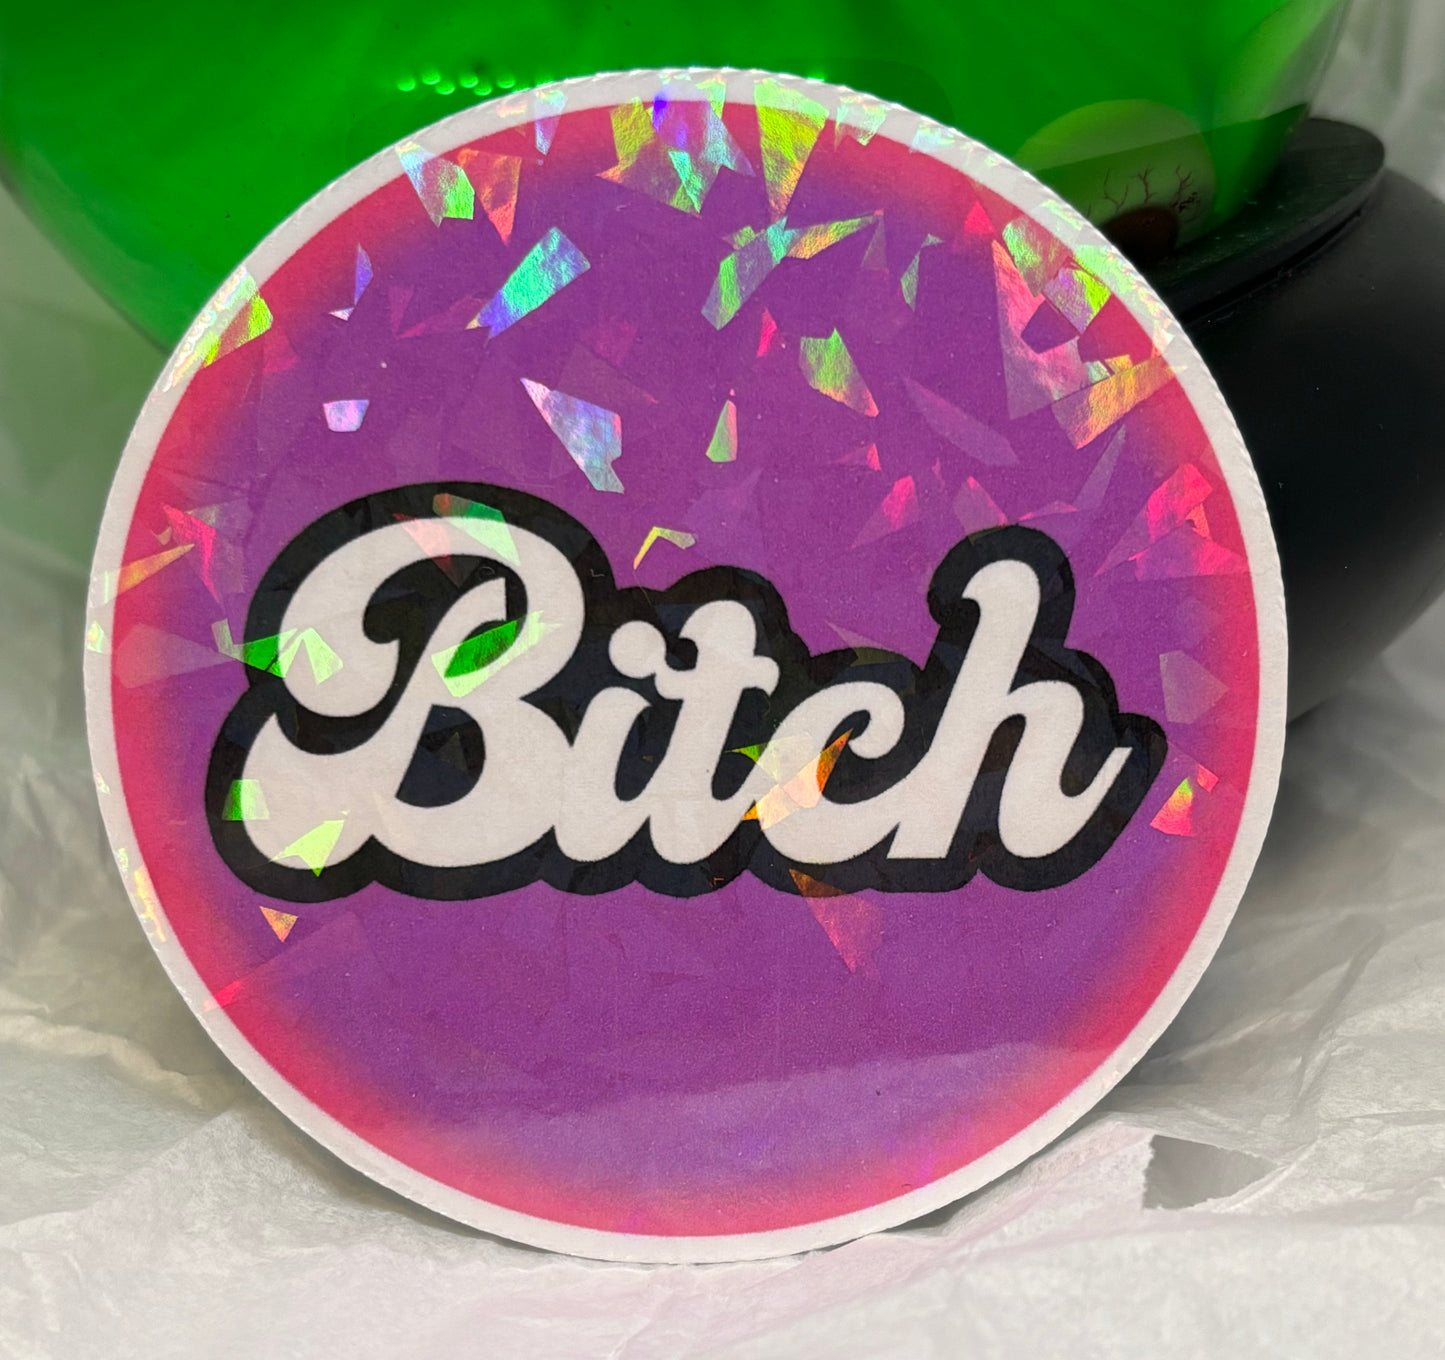 Bitch Sticker